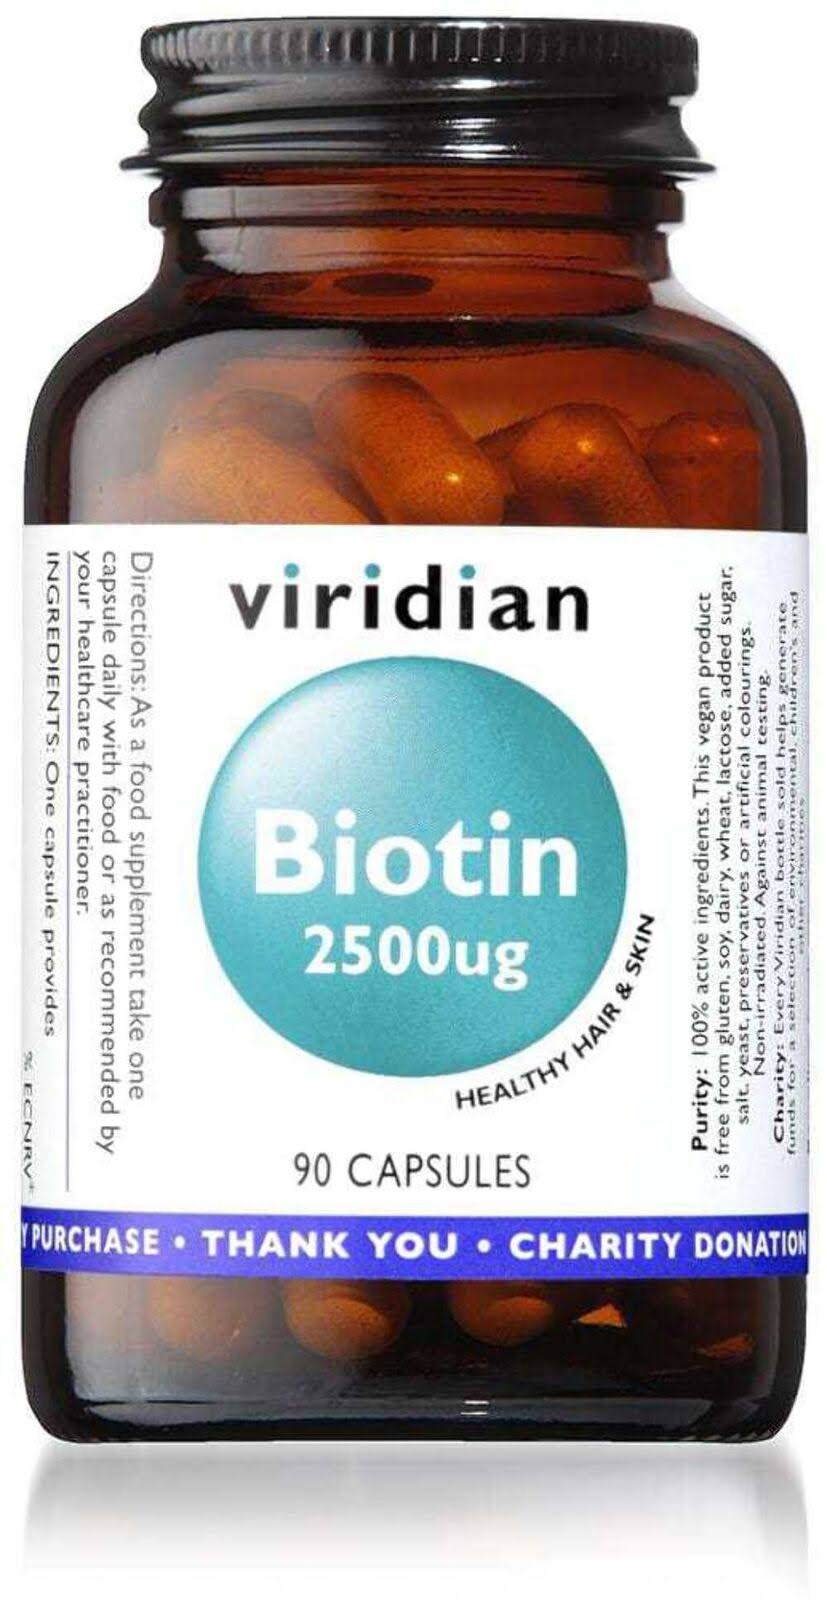 Viridian Biotin 2500ug (90 Capsules)